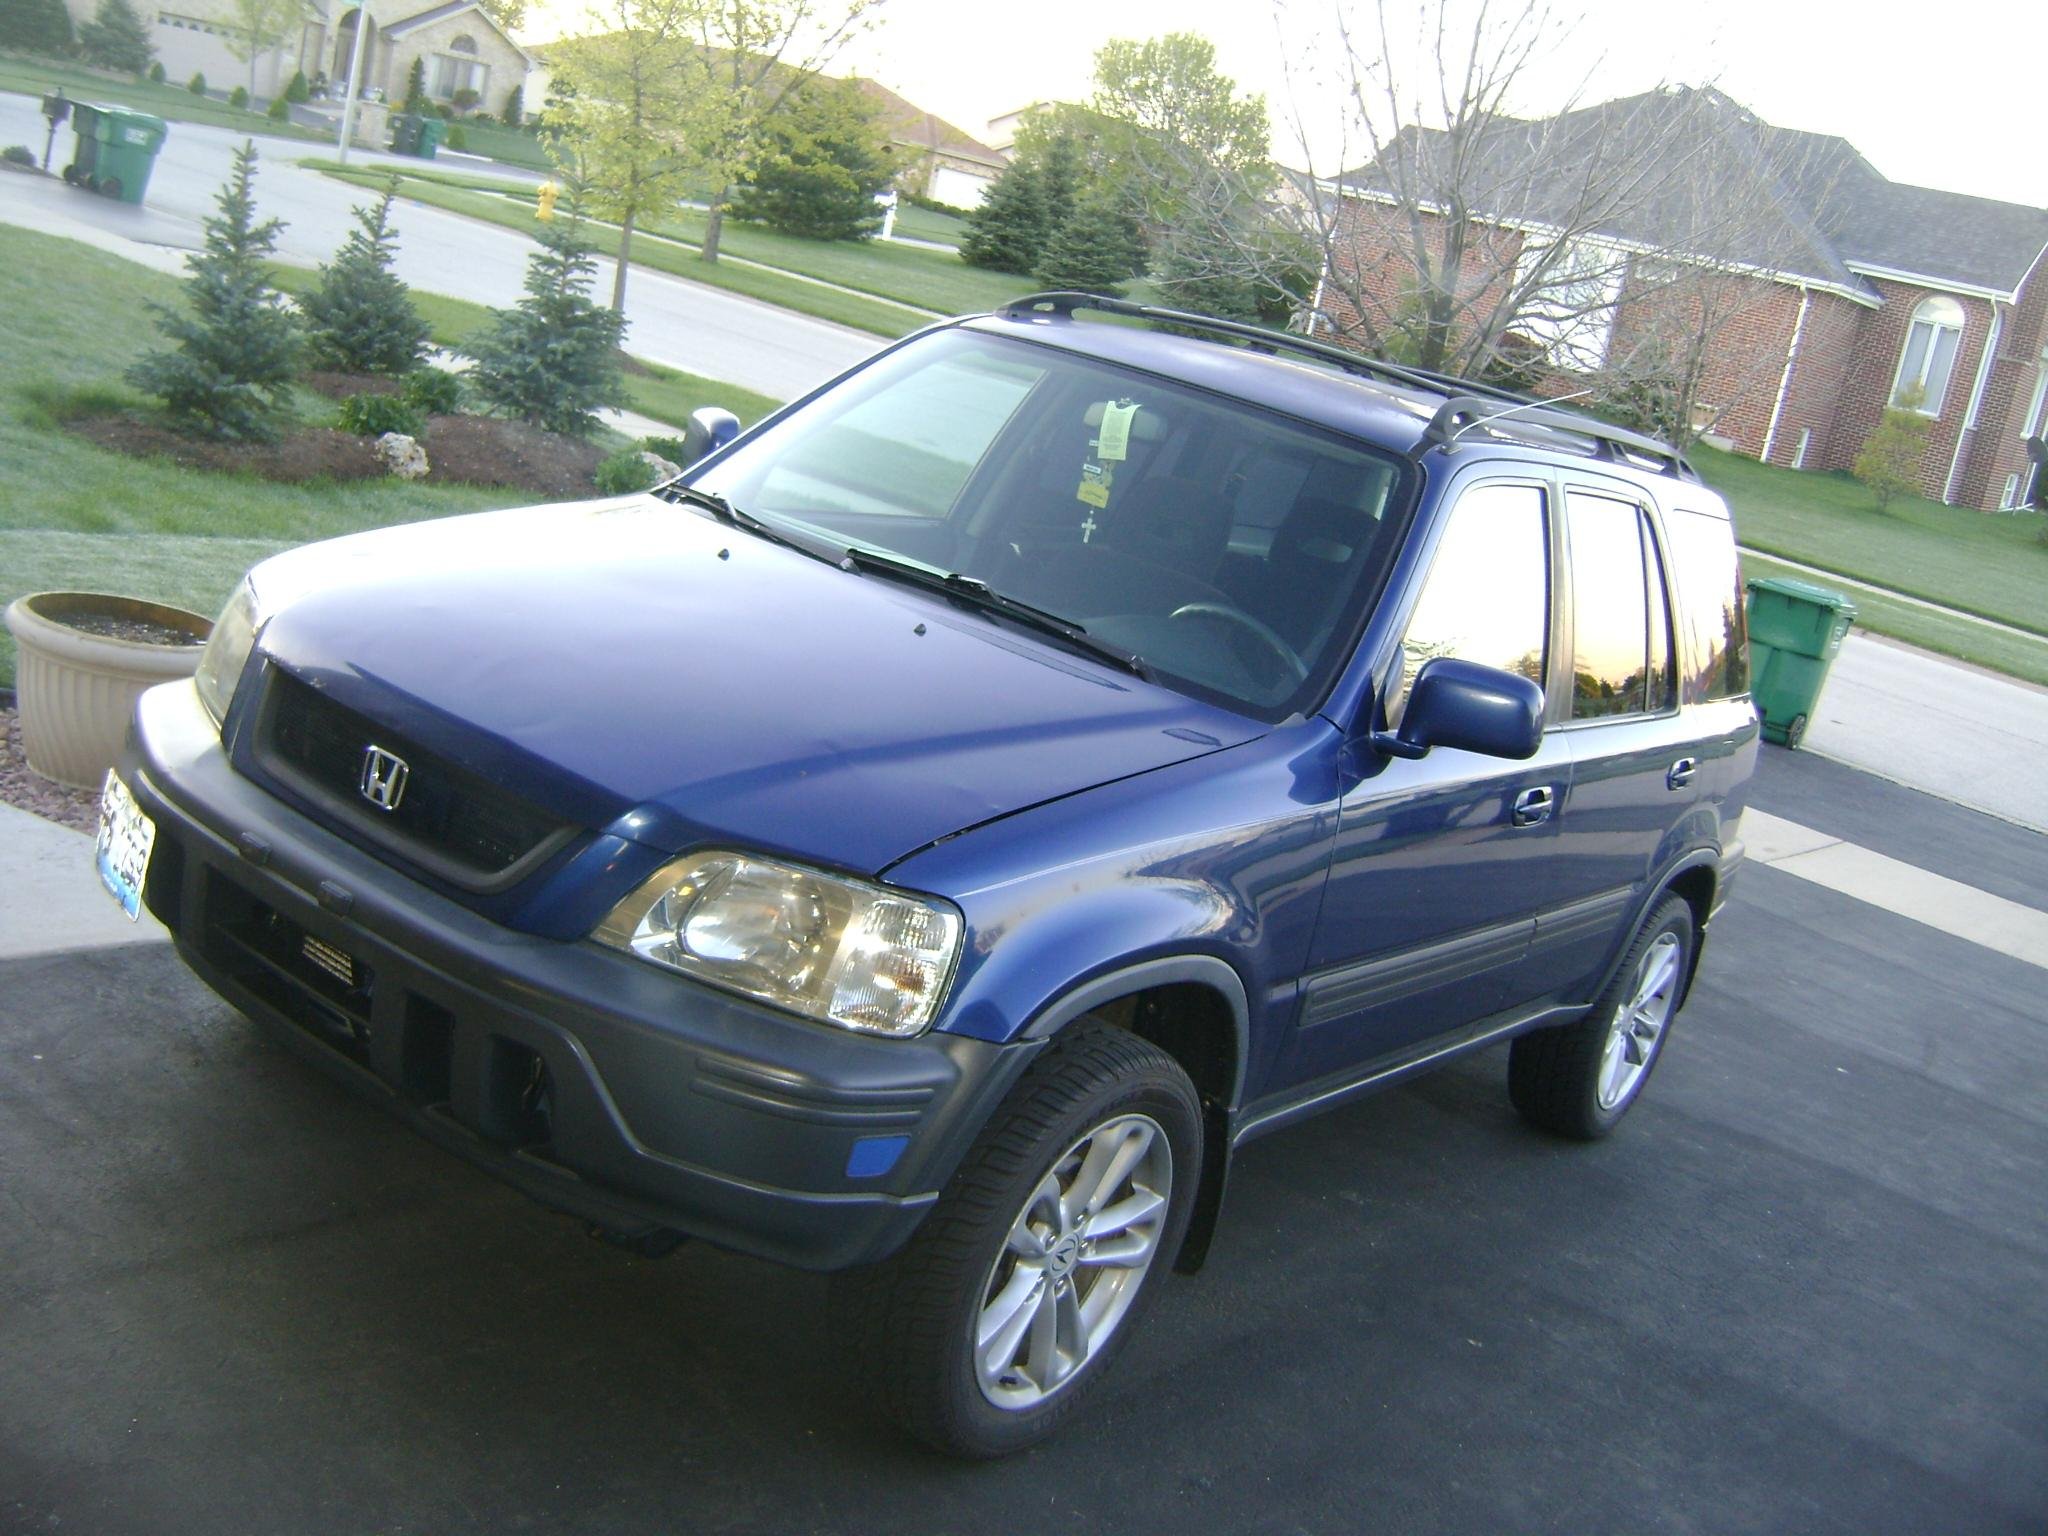 Honda crv 98 год. Honda CR-V 1999. Honda CRV 1998. Honda CR-V 1 1999. Honda CRV 2001.